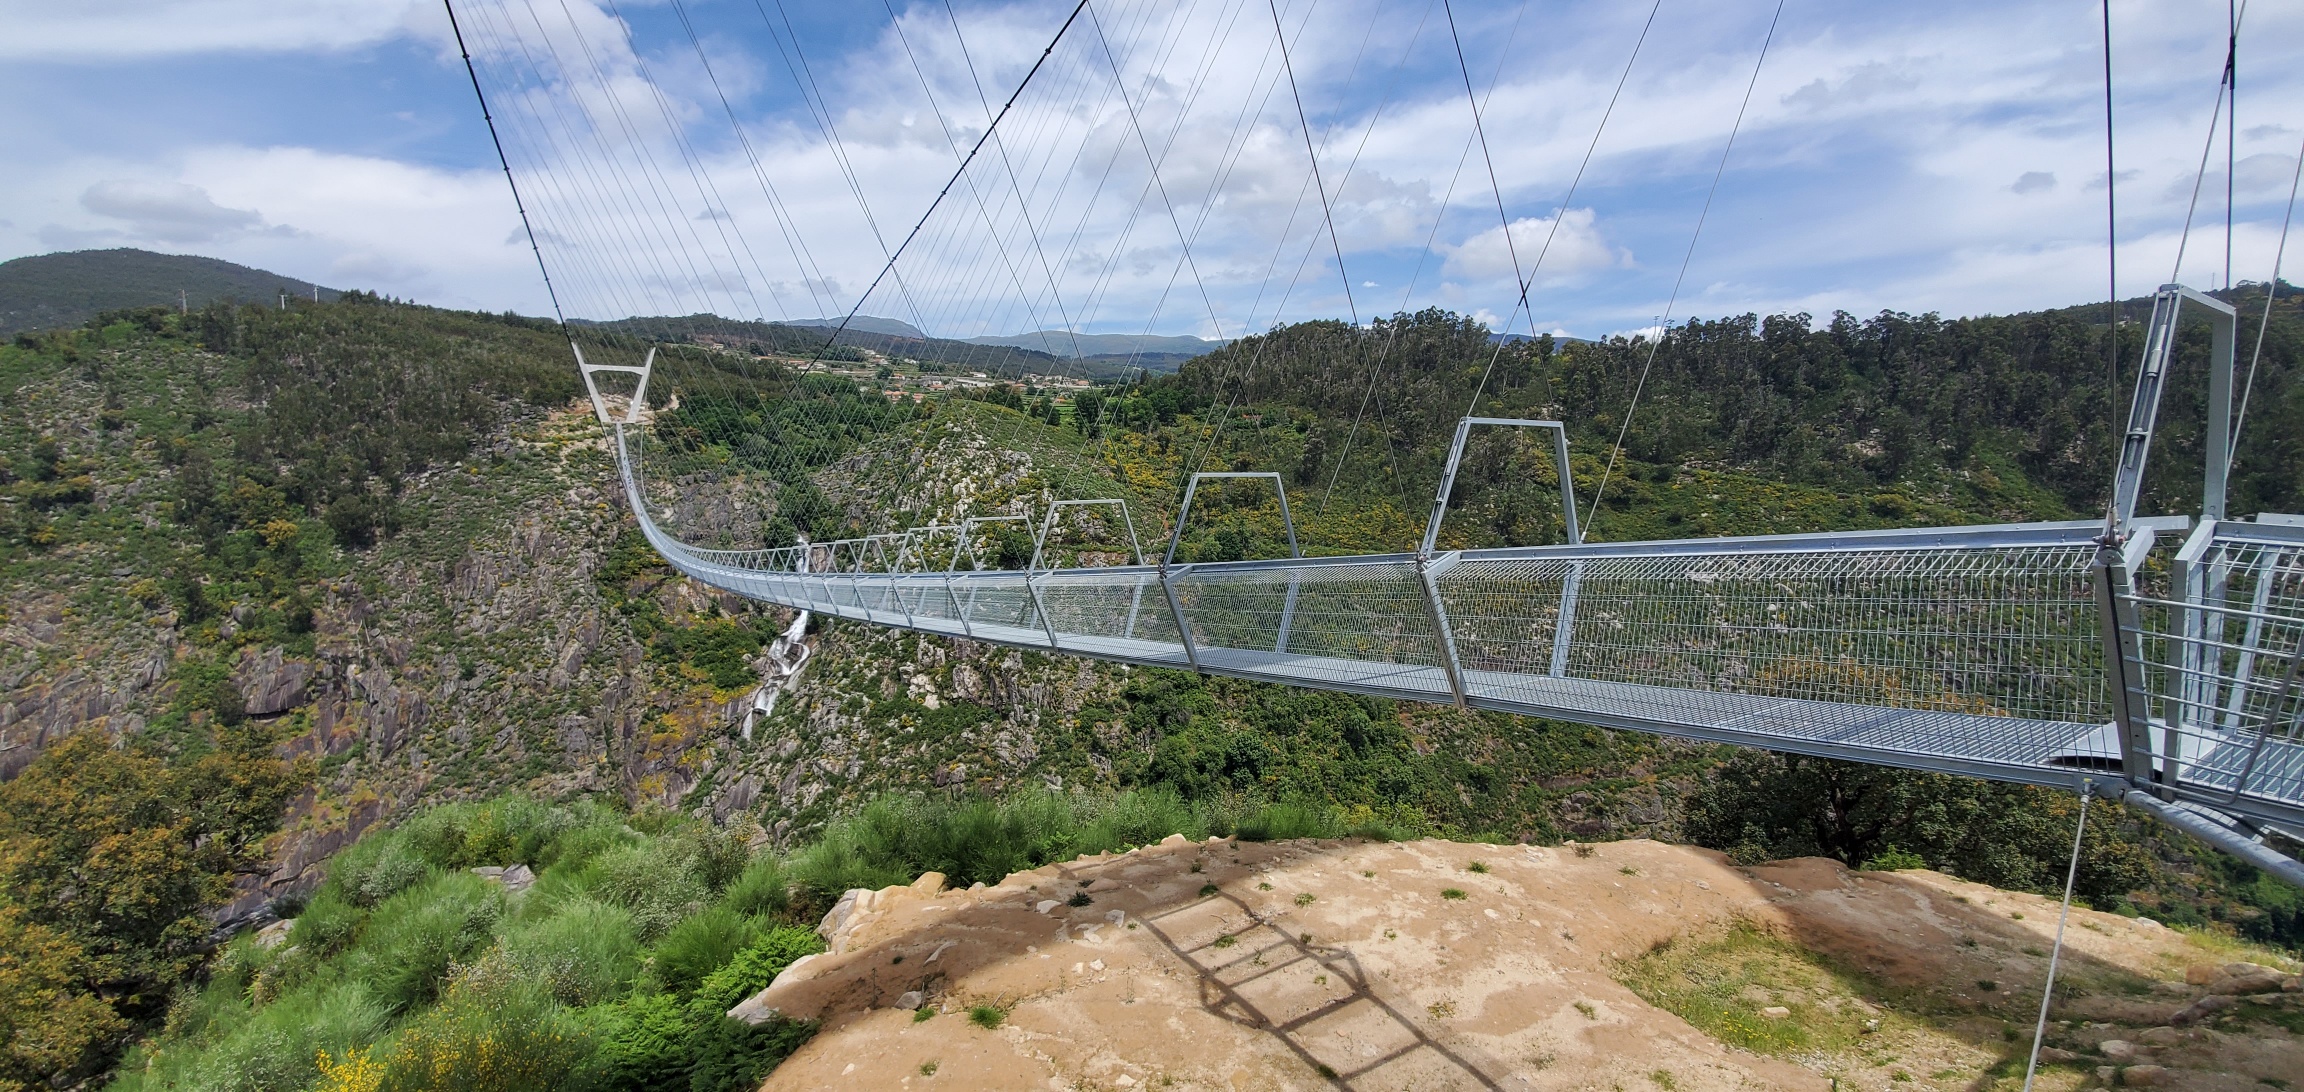 Strolling Across the Longest Suspension Bridge in the World